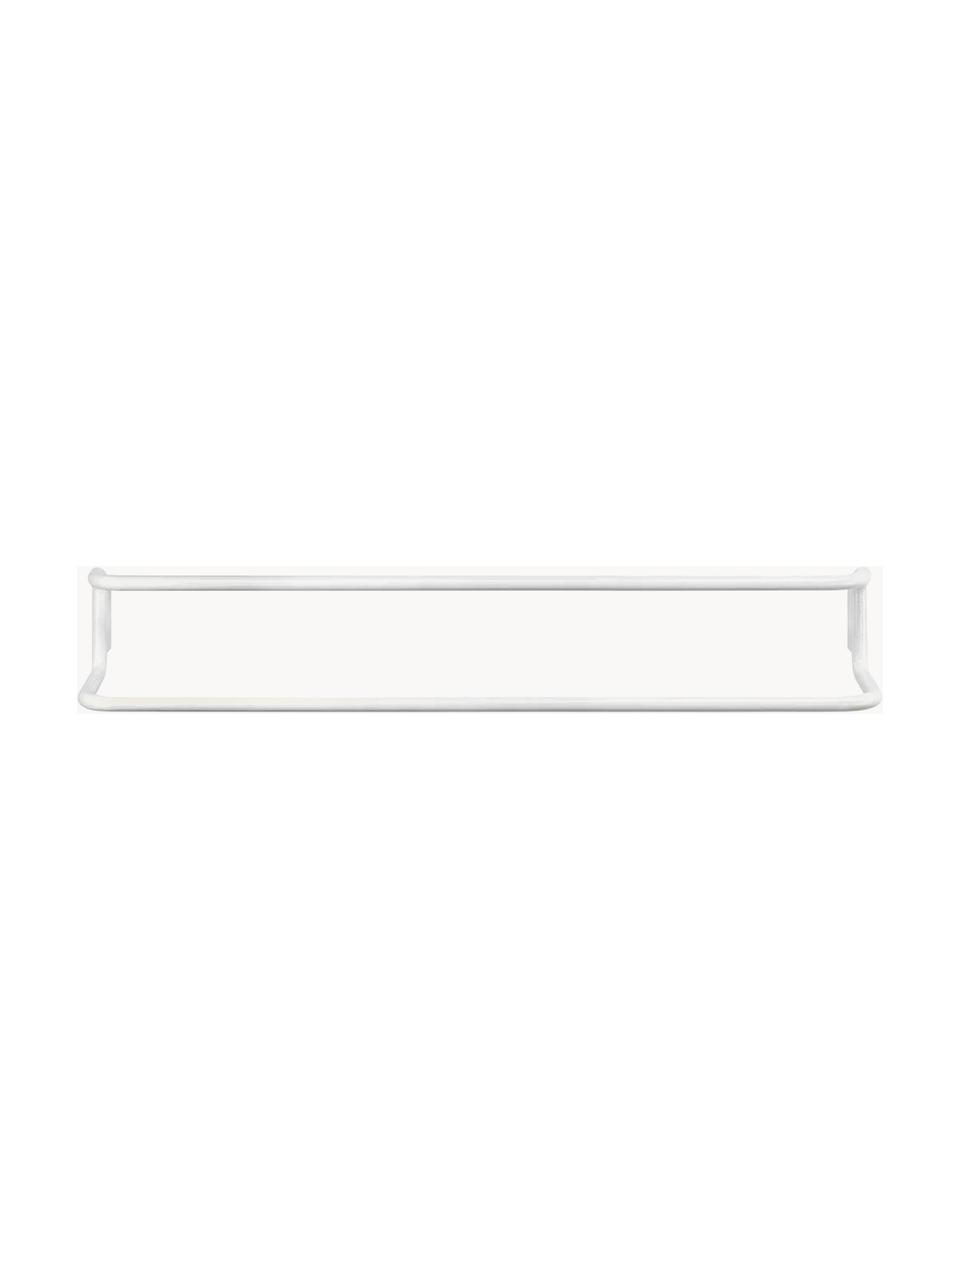 Porte-serviette Modo, Acier inoxydable, Blanc, larg. 60 x haut. 9 cm